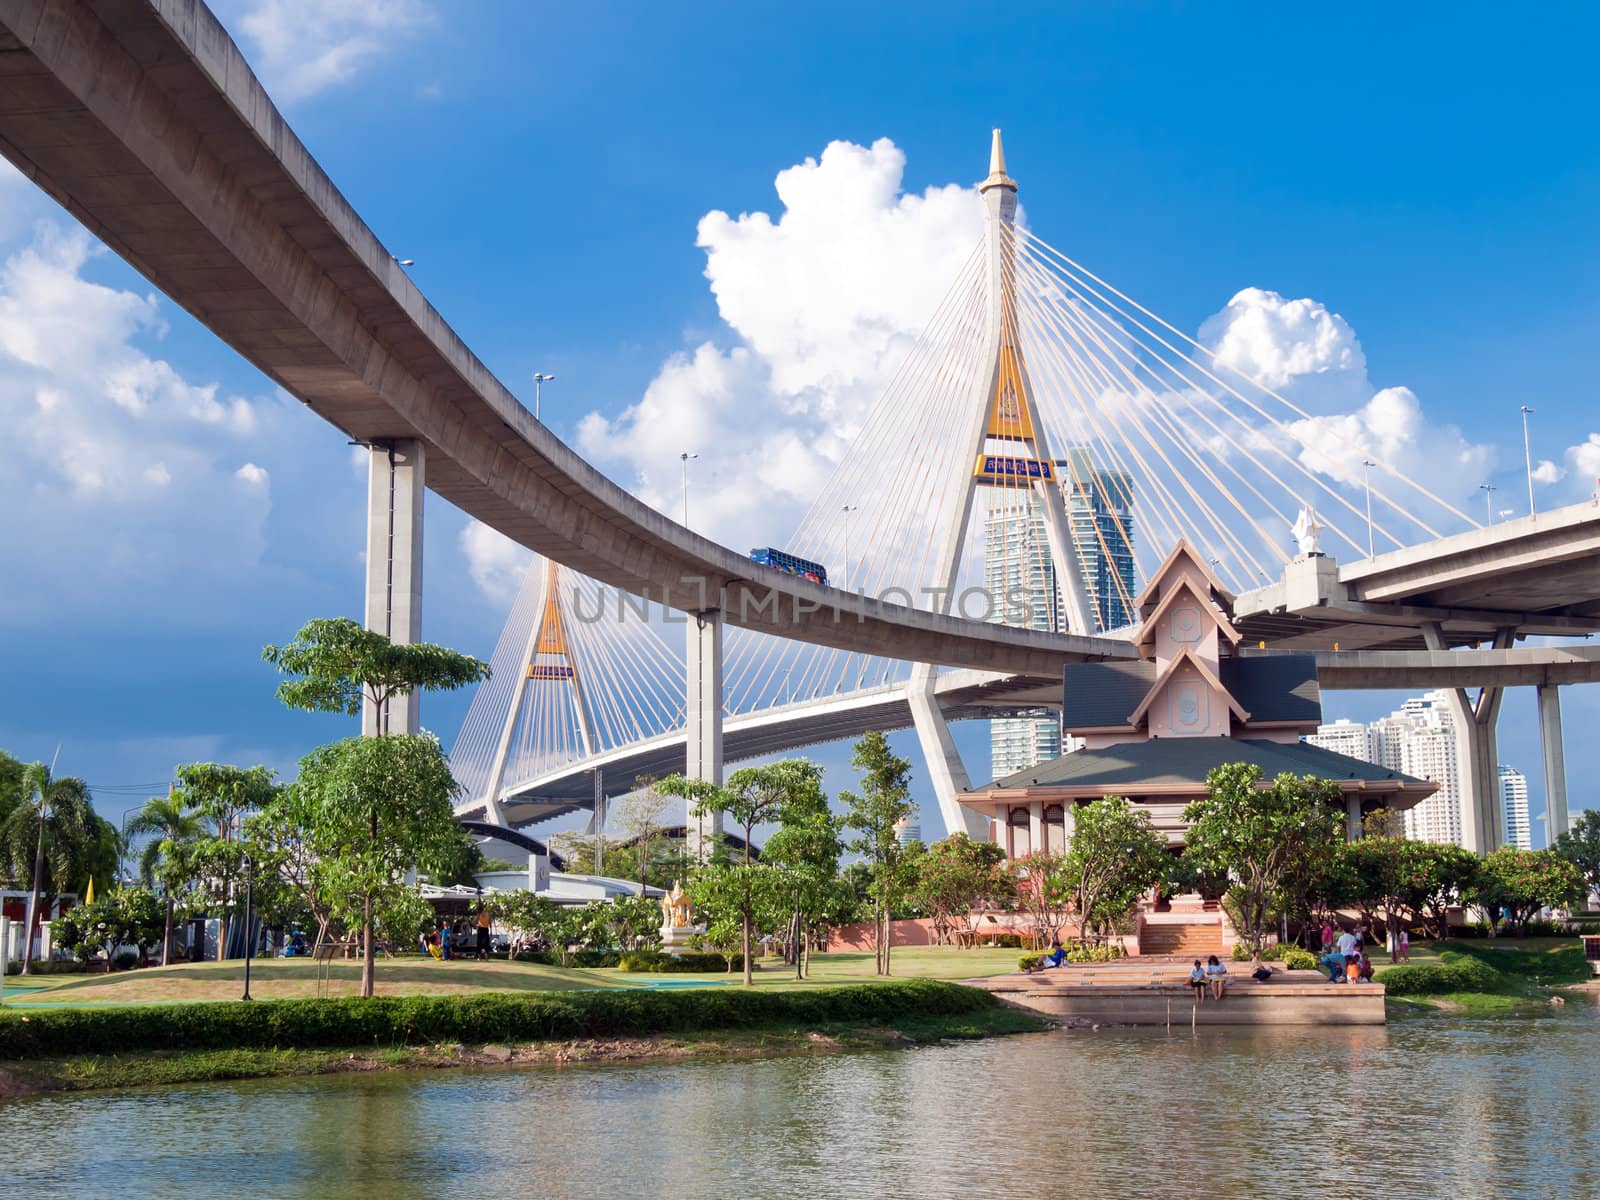 Bhumibol Bridge in Thailand,The bridge crosses the Chao Phraya R by jakgree